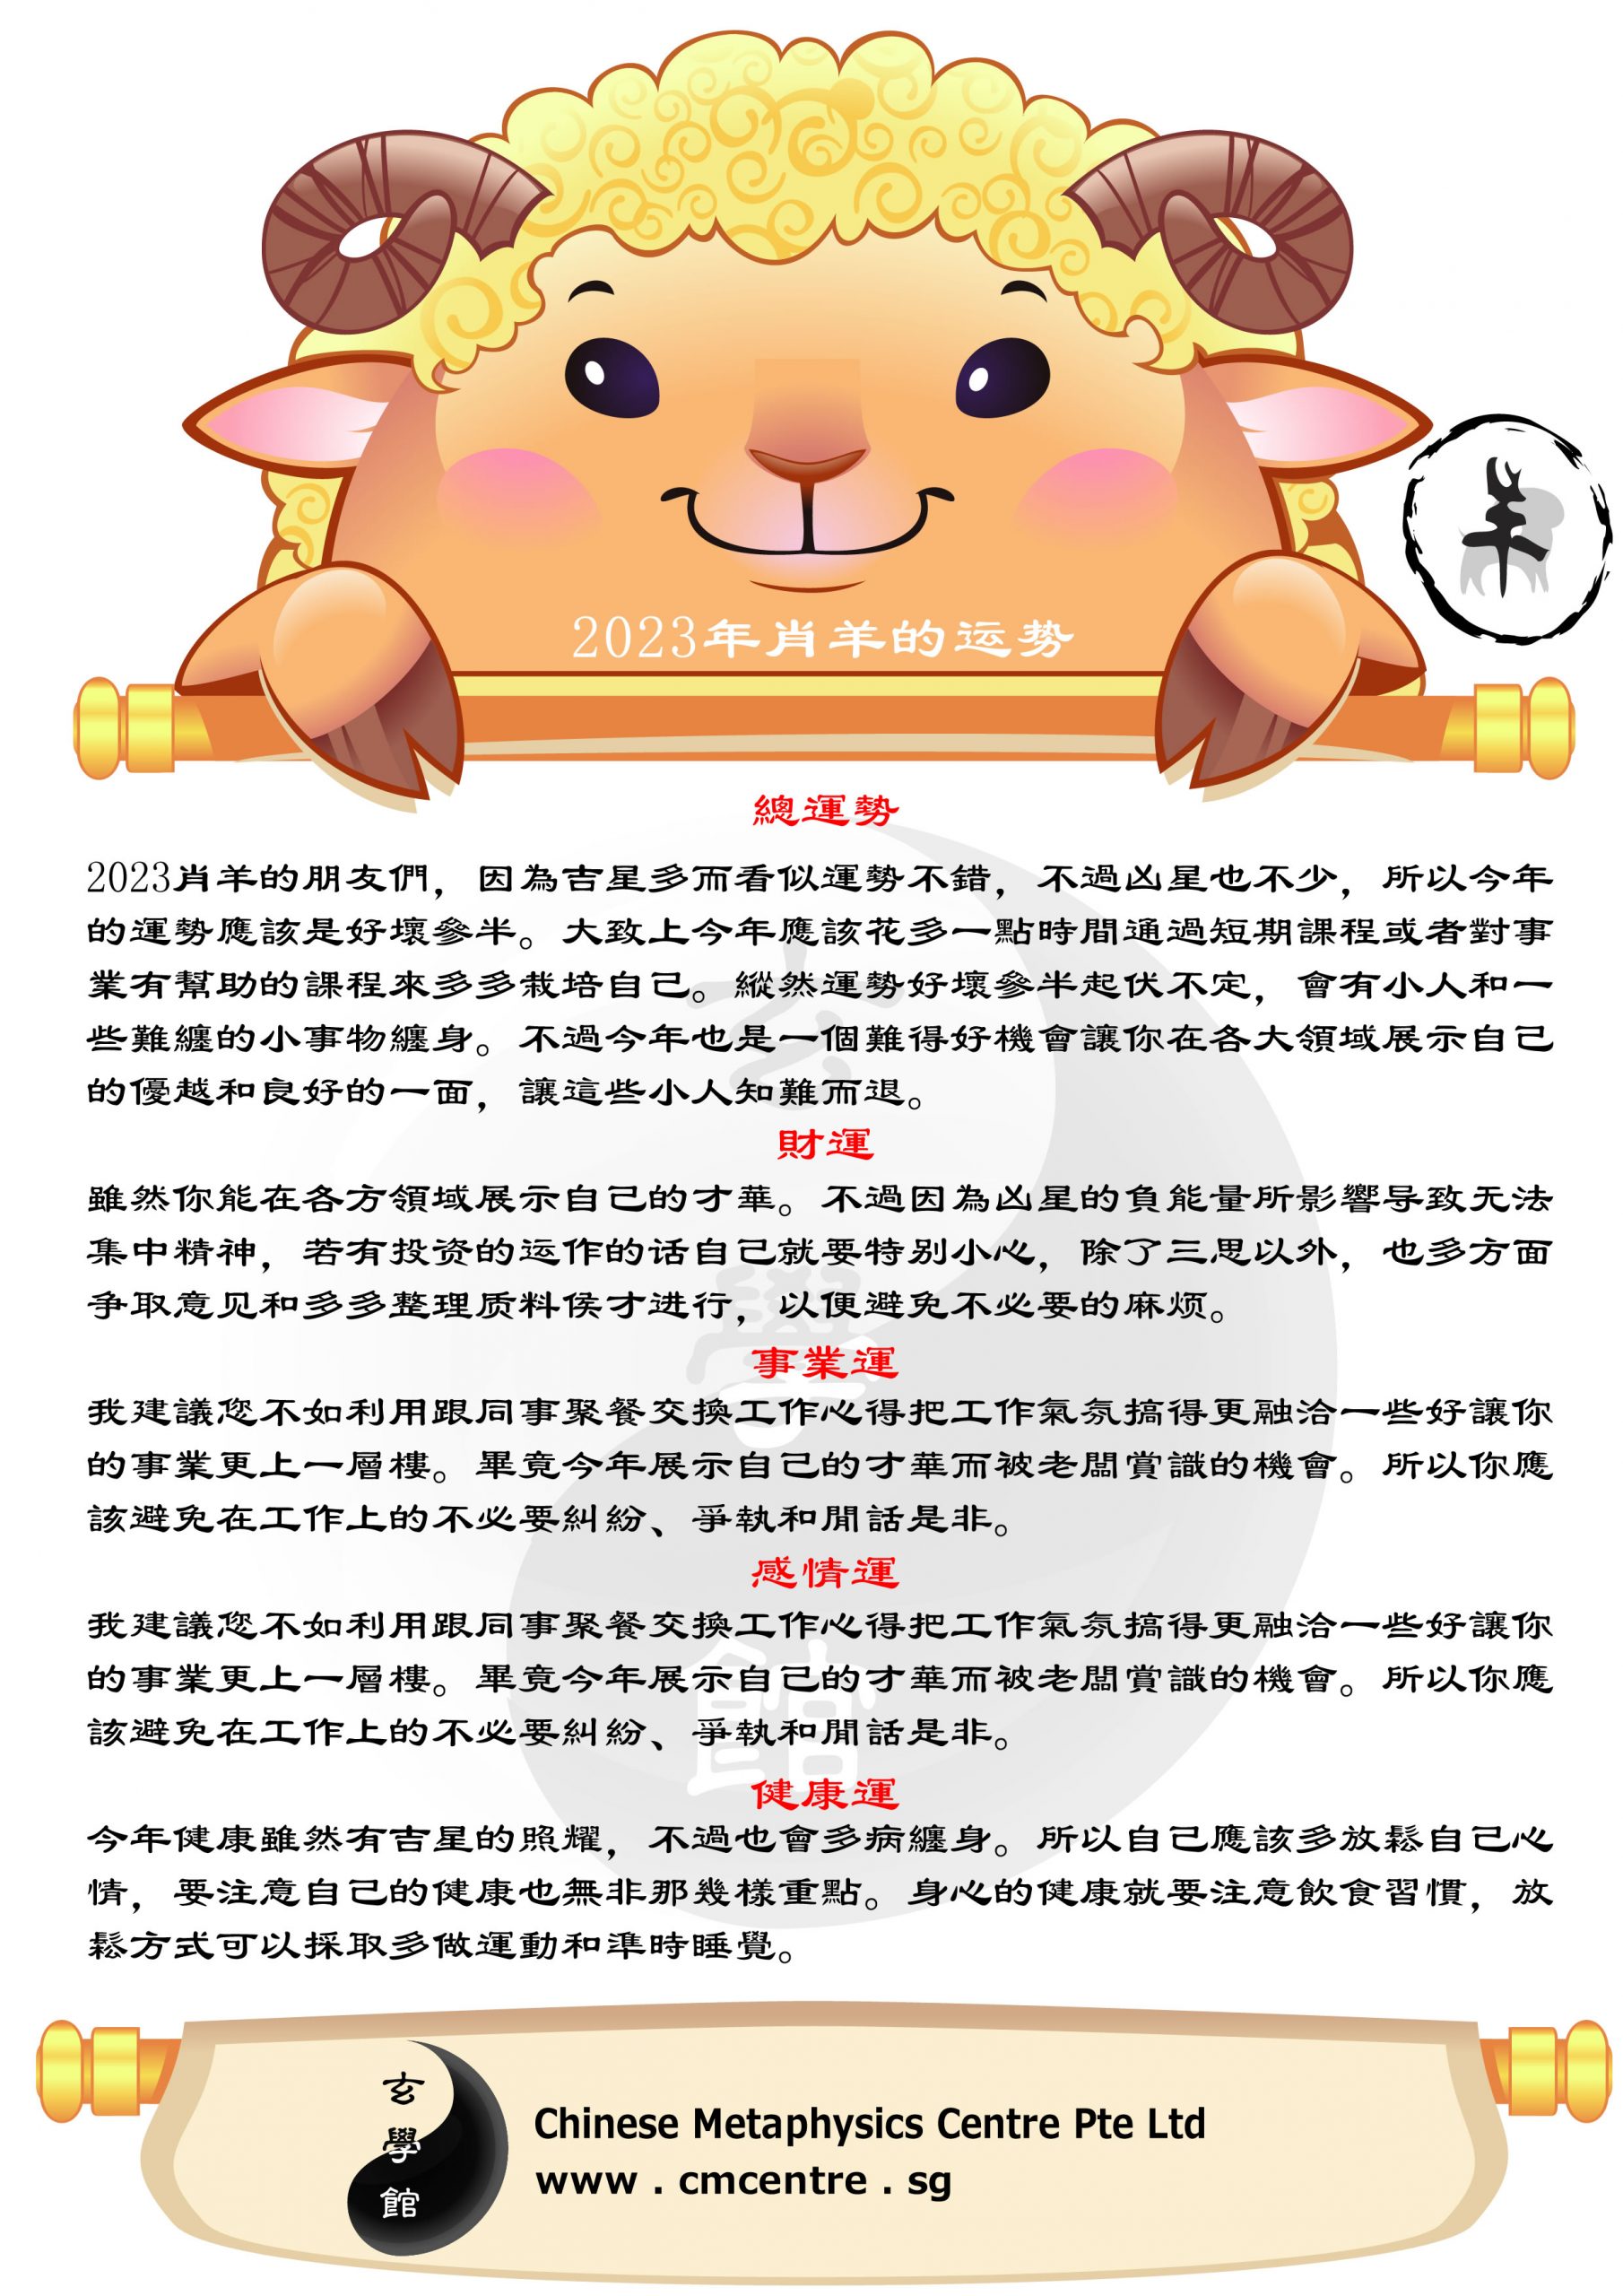 2023 Chinese Zodiac Prediction - Goat | Chinese Metaphysics Pte Ltd ...